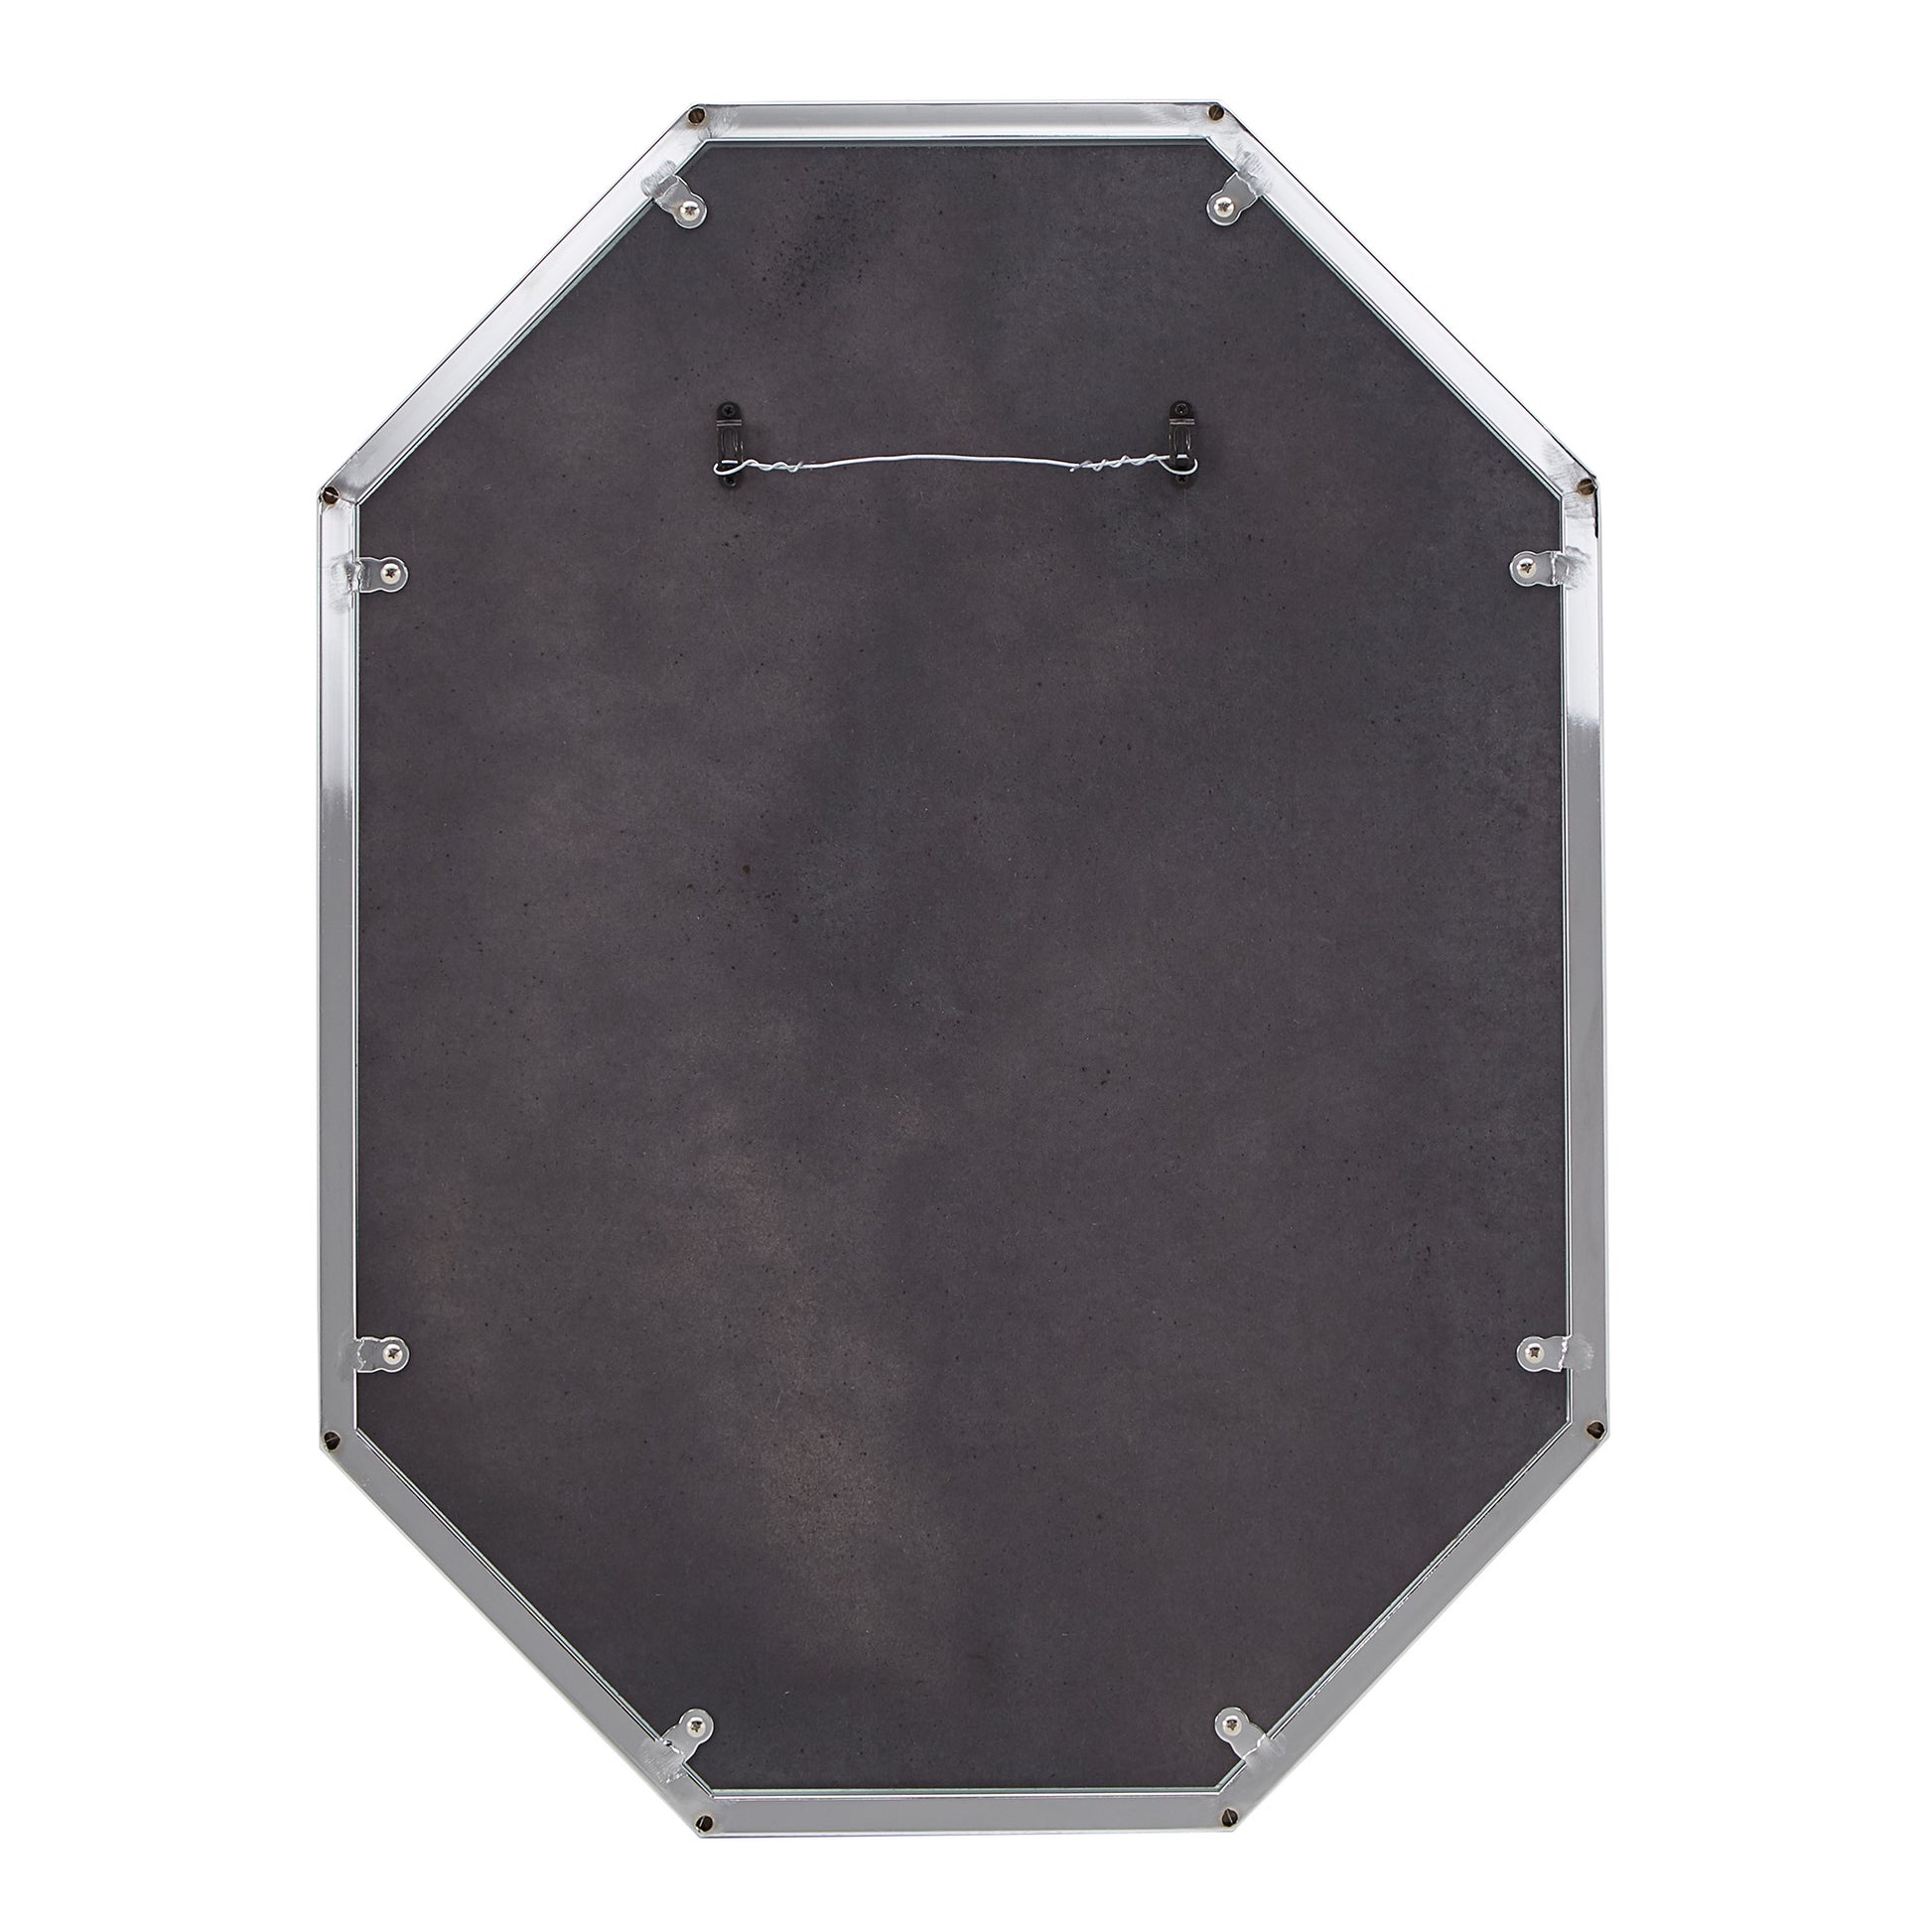 15 Metallic circles Wall Mirror (48 x 32 Inches) - Punam Metalcrafts